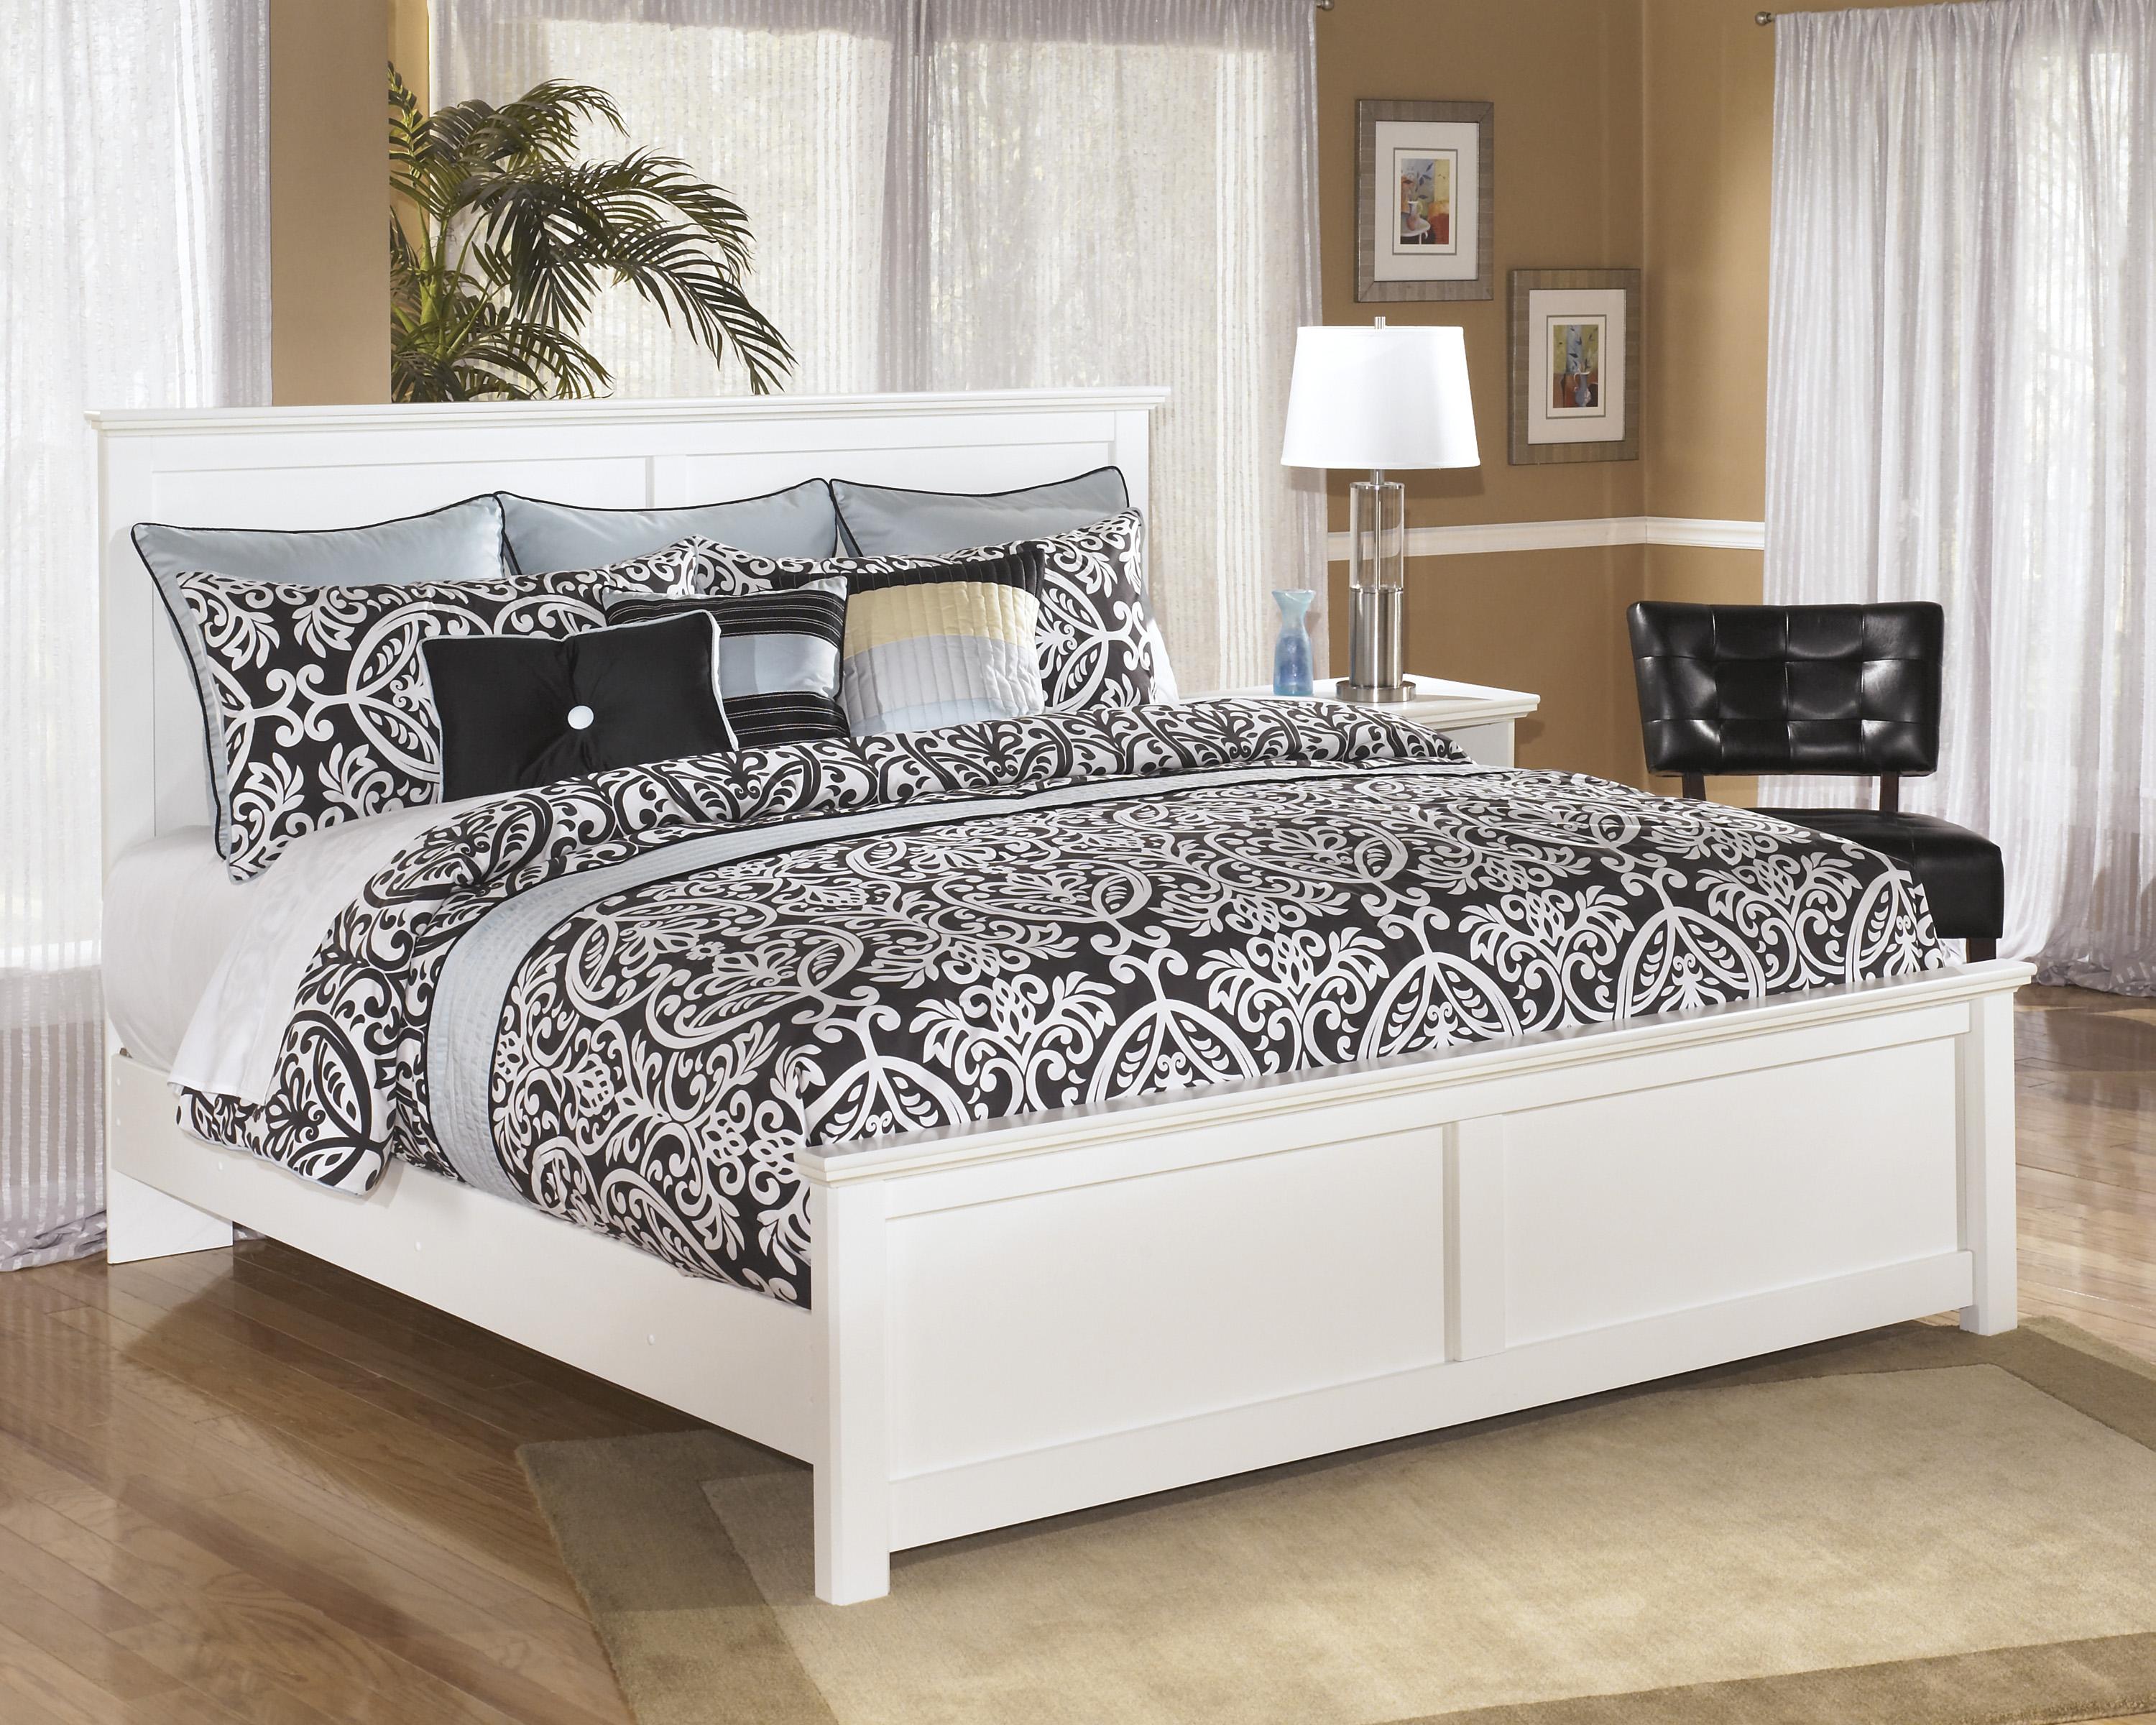 

    
Ashley Bostwick Shoals B139 King Size Panel Bedroom Set 3pcs in White
